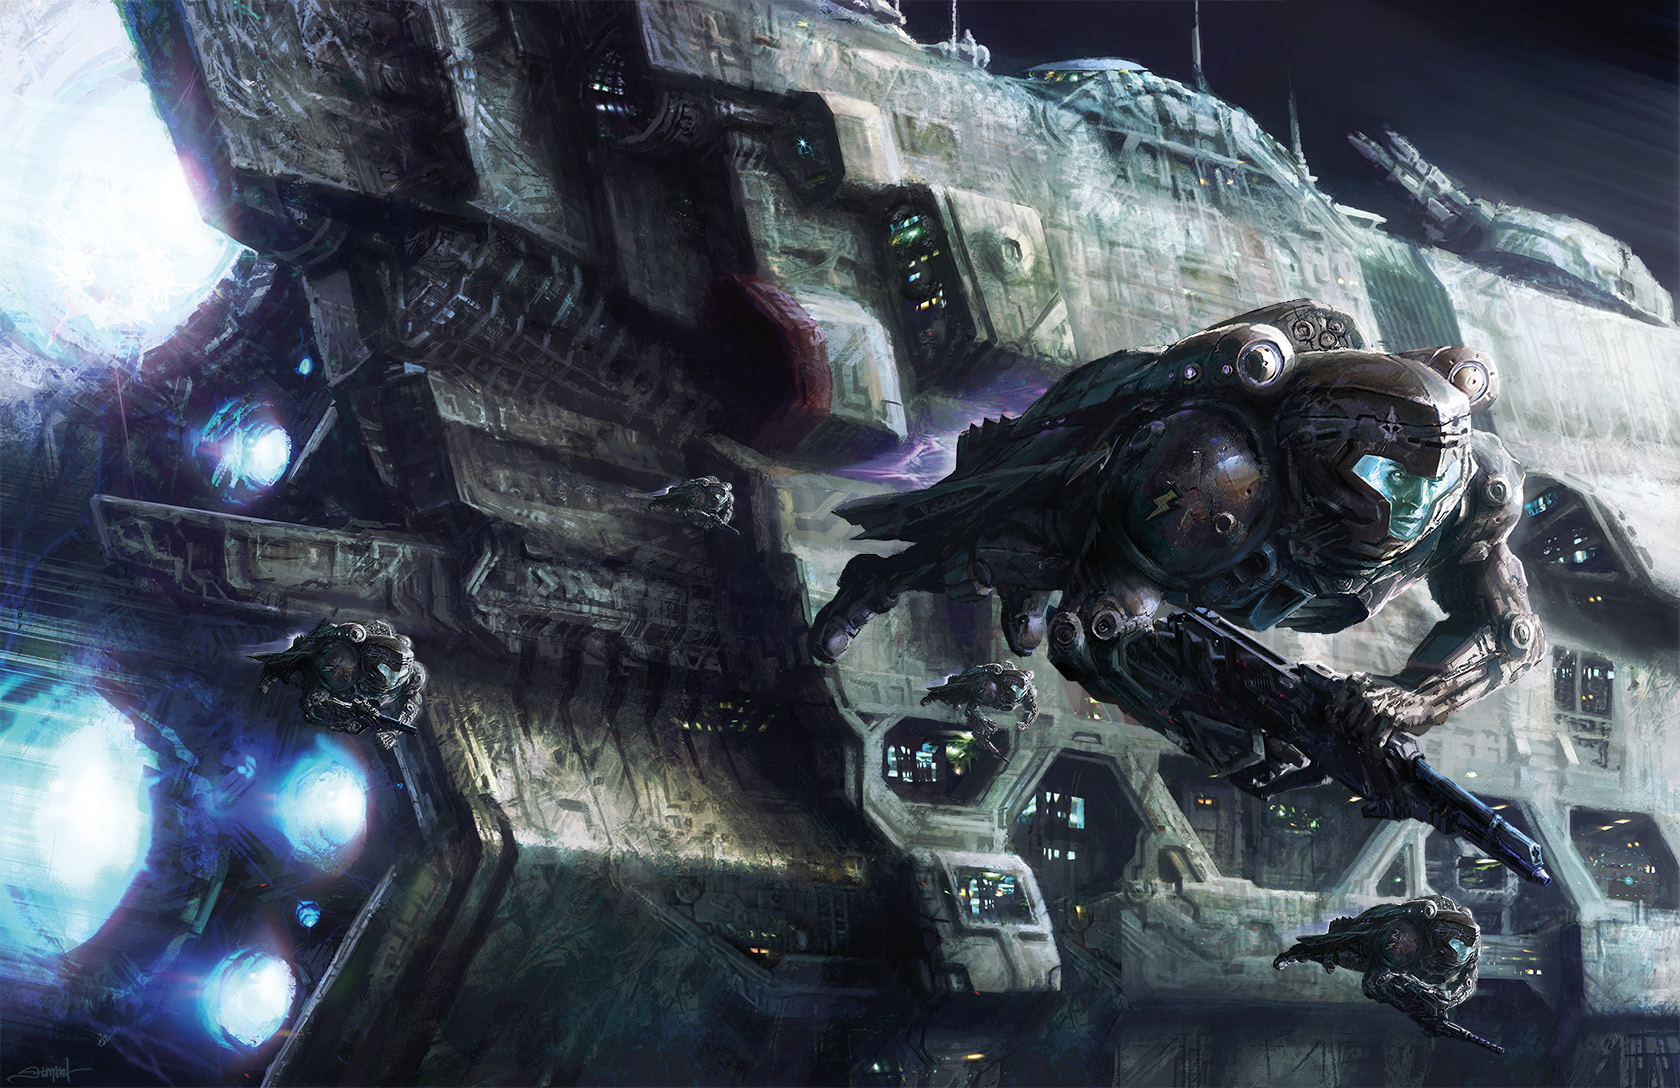 http://coolvibe.com/wp-content/uploads/2012/02/Sci-Fi-David-Demaret-The-Lost-Fleet-Dreadnought.jpg